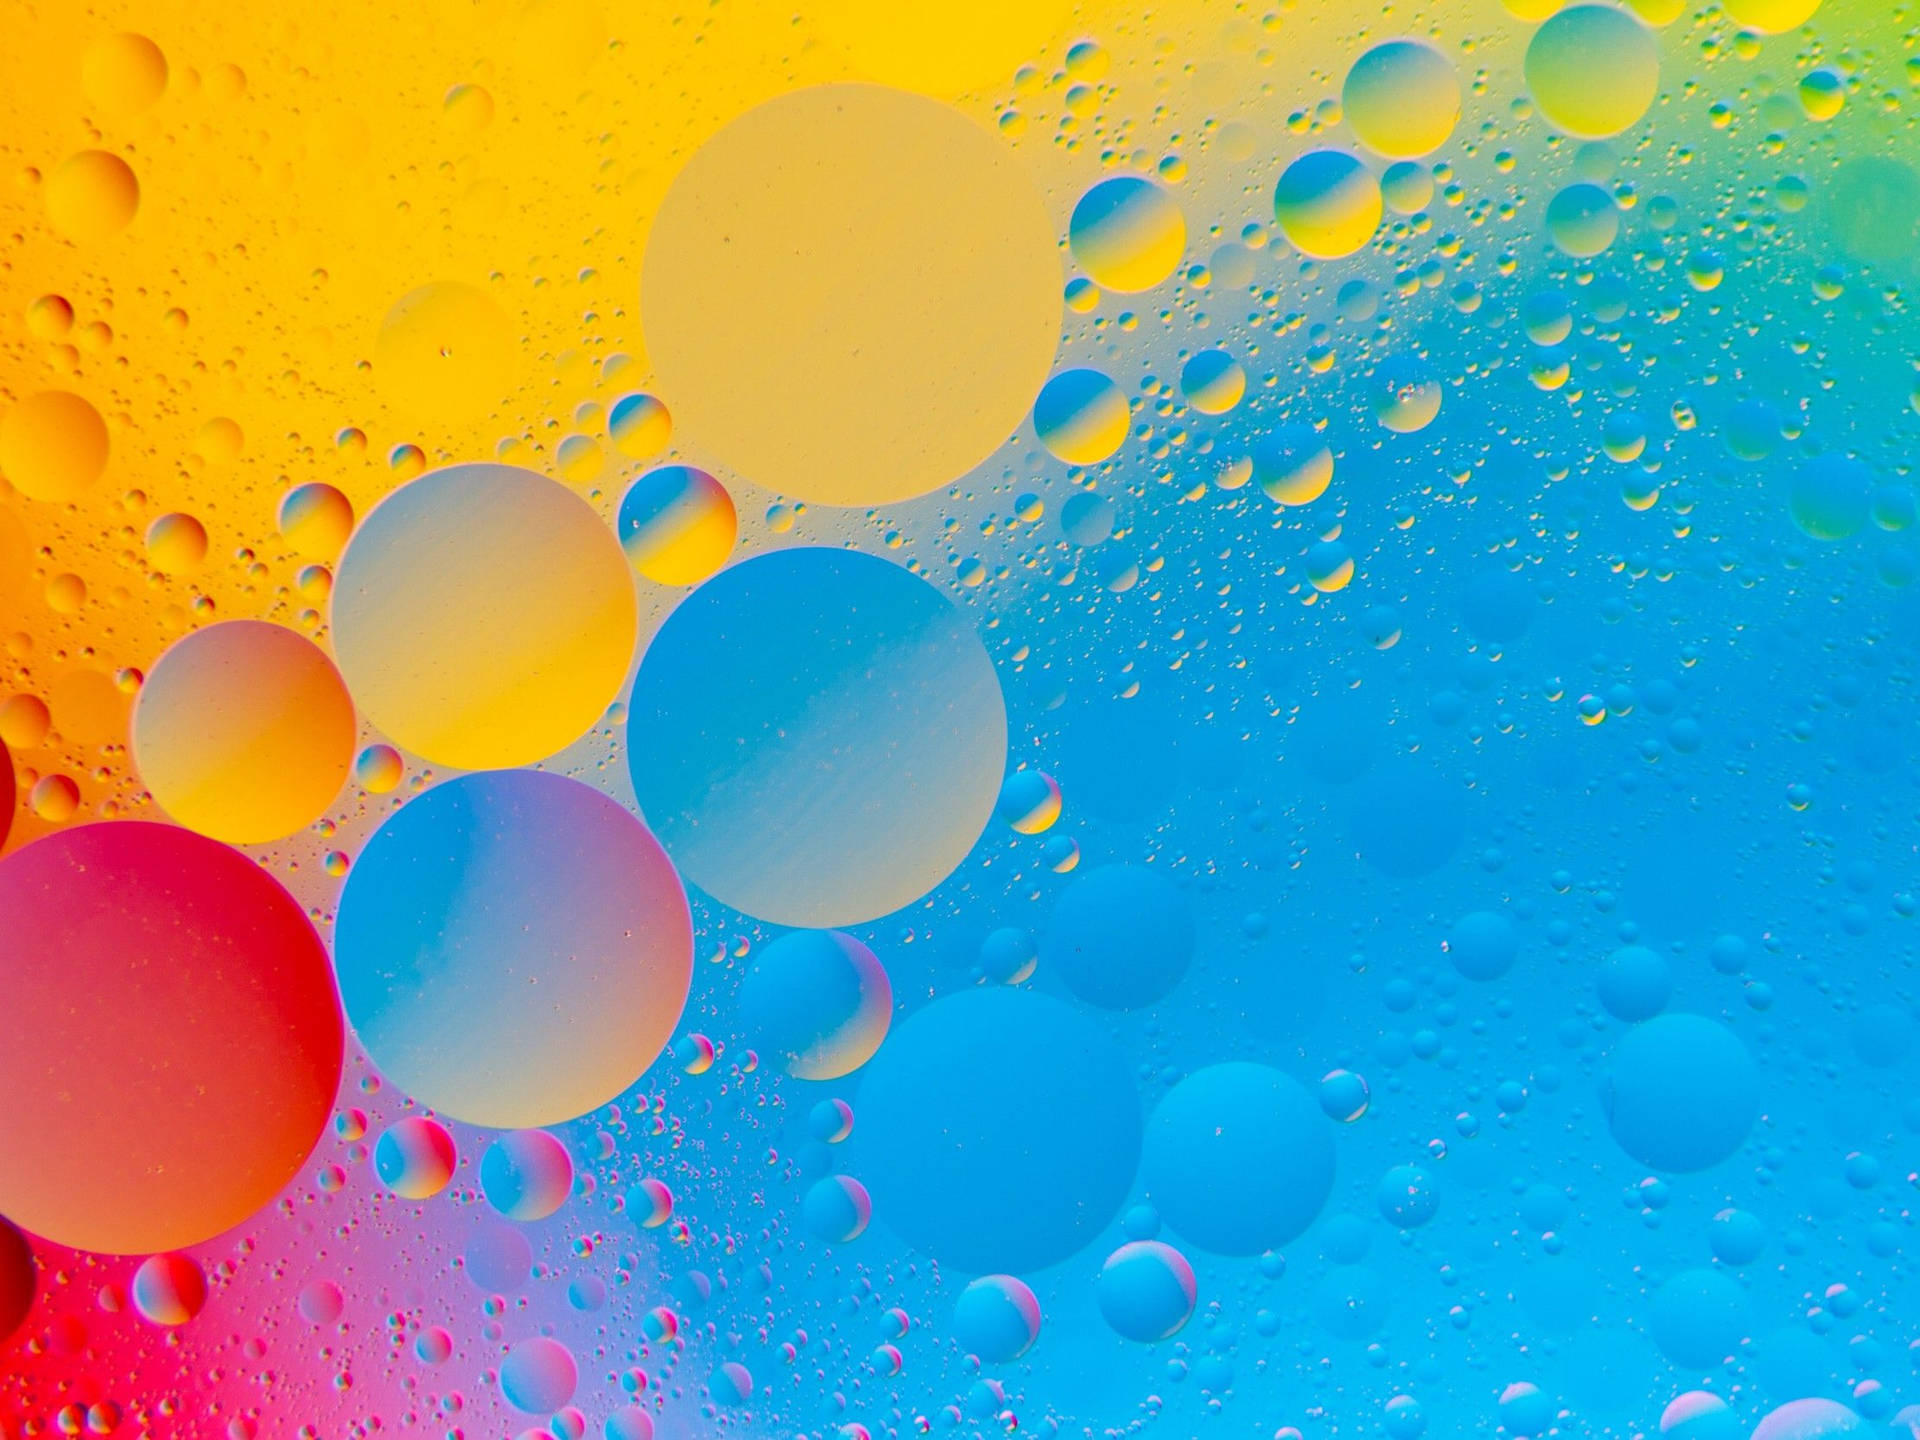 Ipad Pro Colorful Bubbles